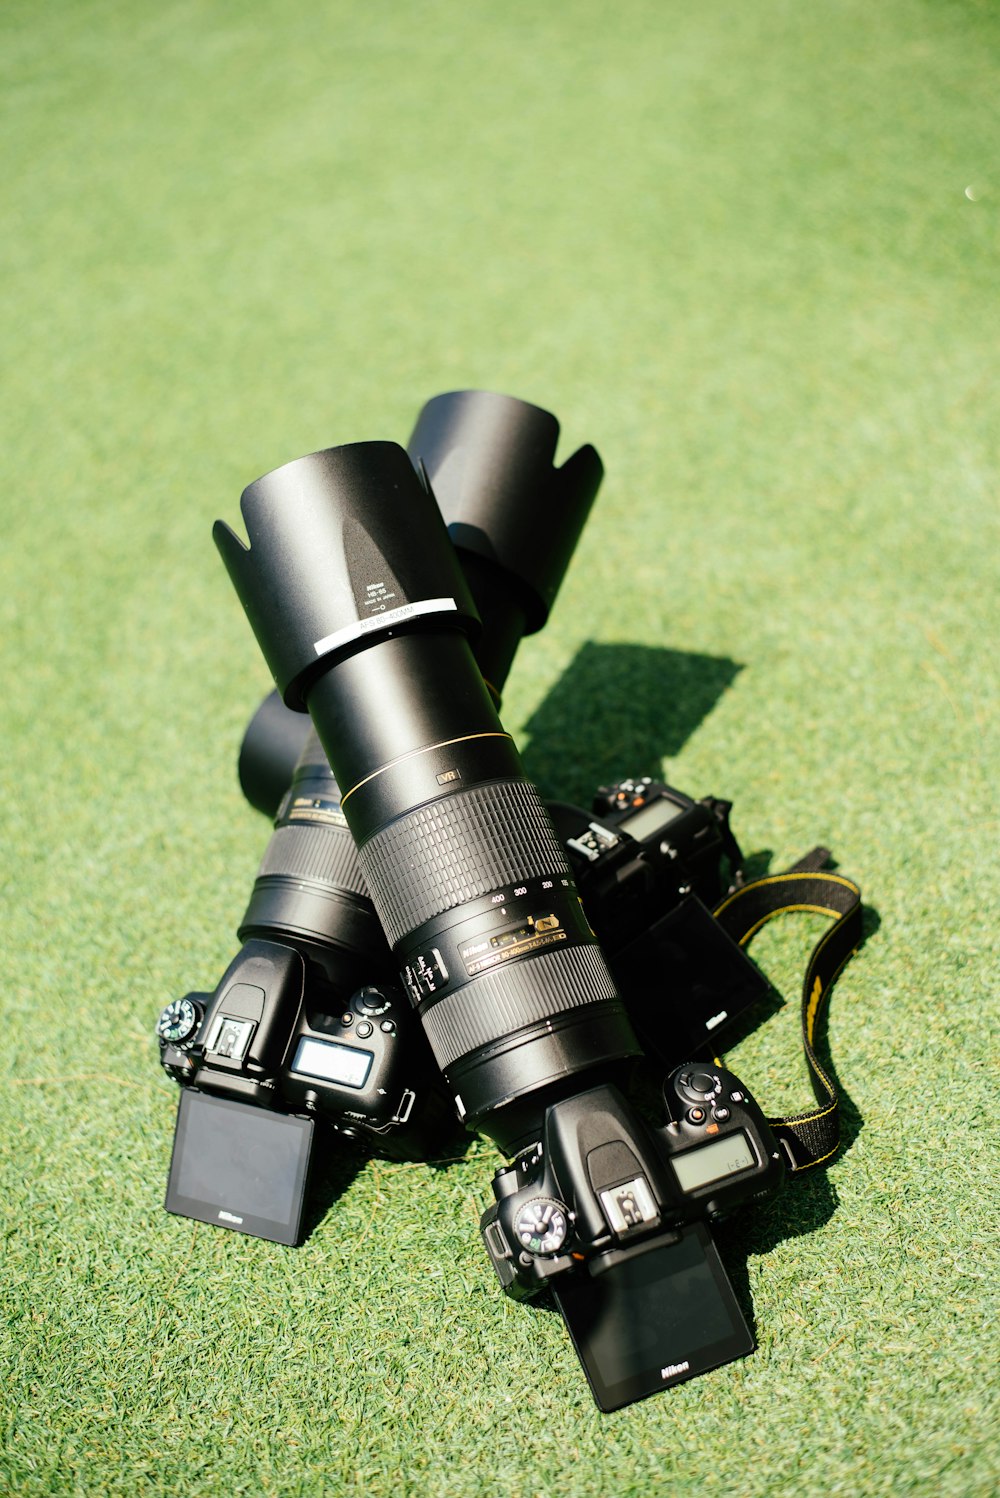 two black Nikon DSLR cameras on green grass